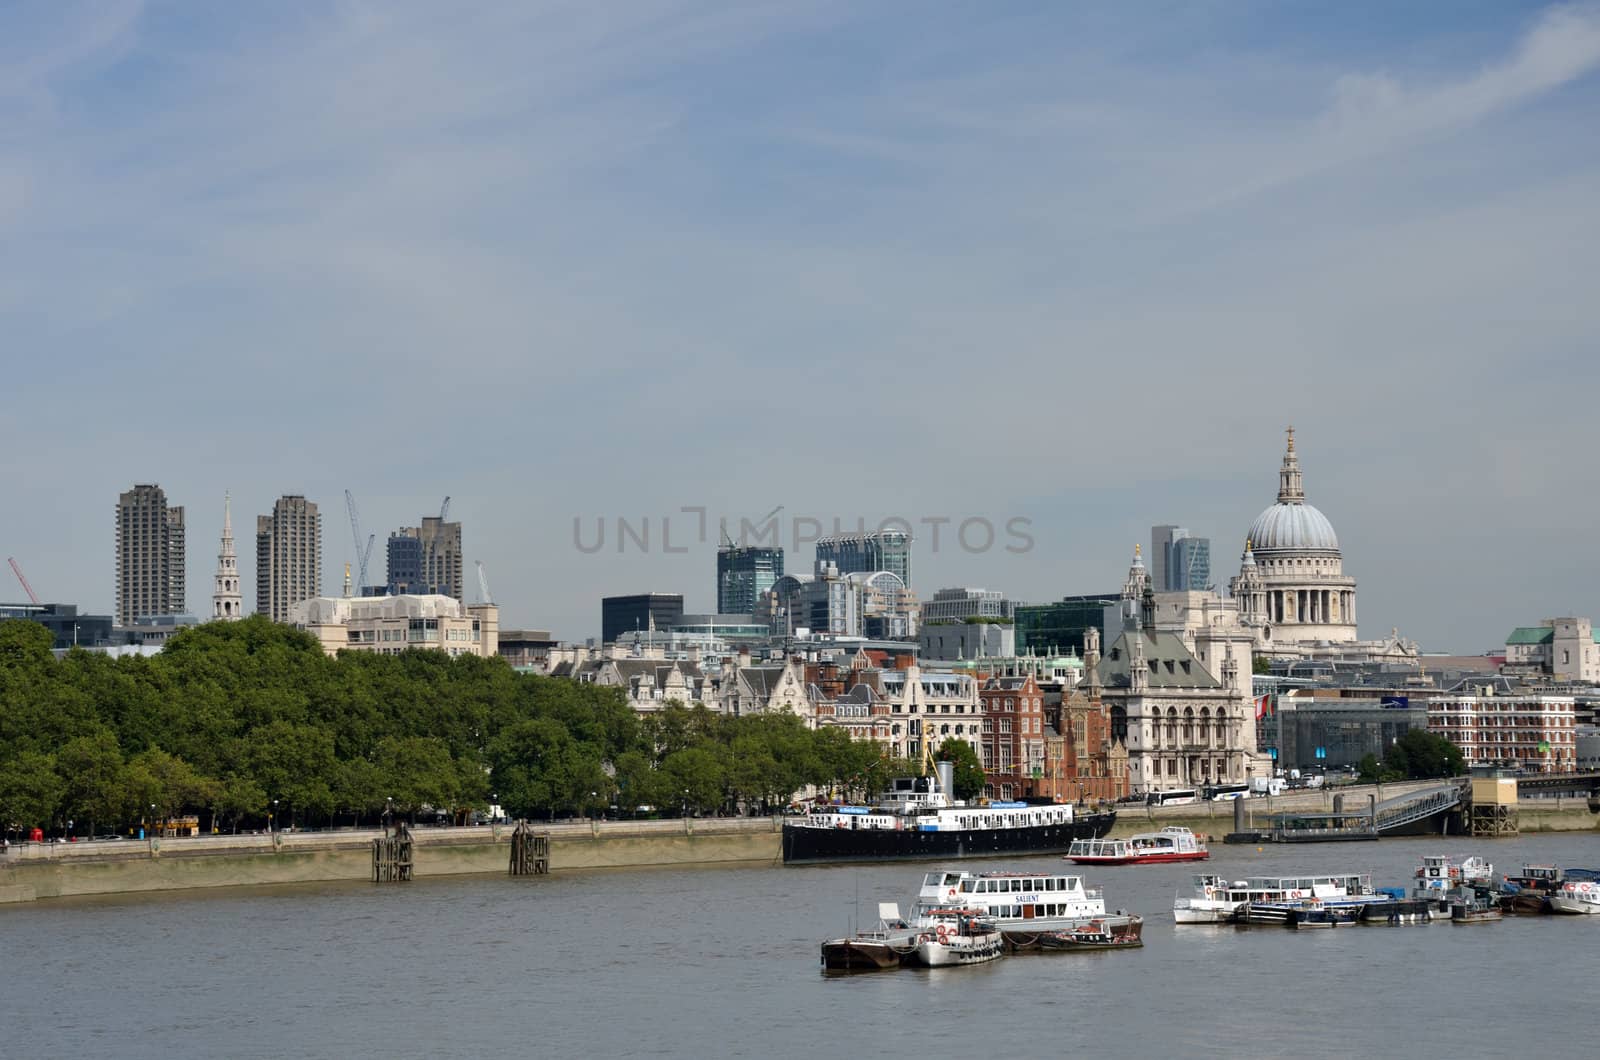 View from Waterloo Bridge by pauws99